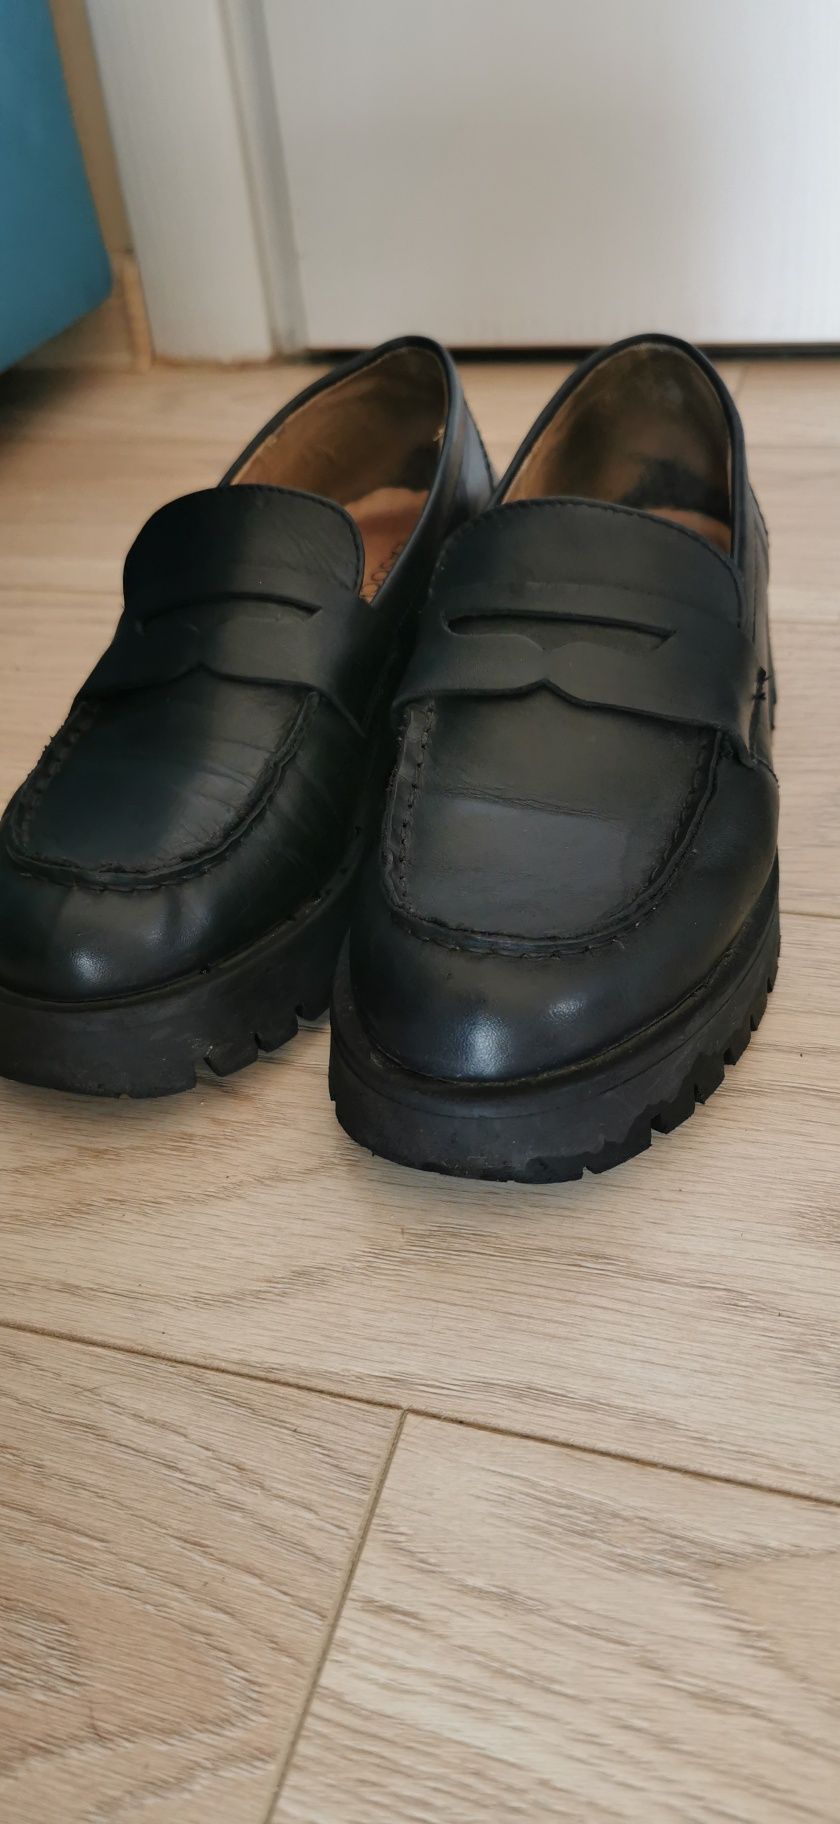 Mokasyny Lasocki 38 czarne buty półbuty